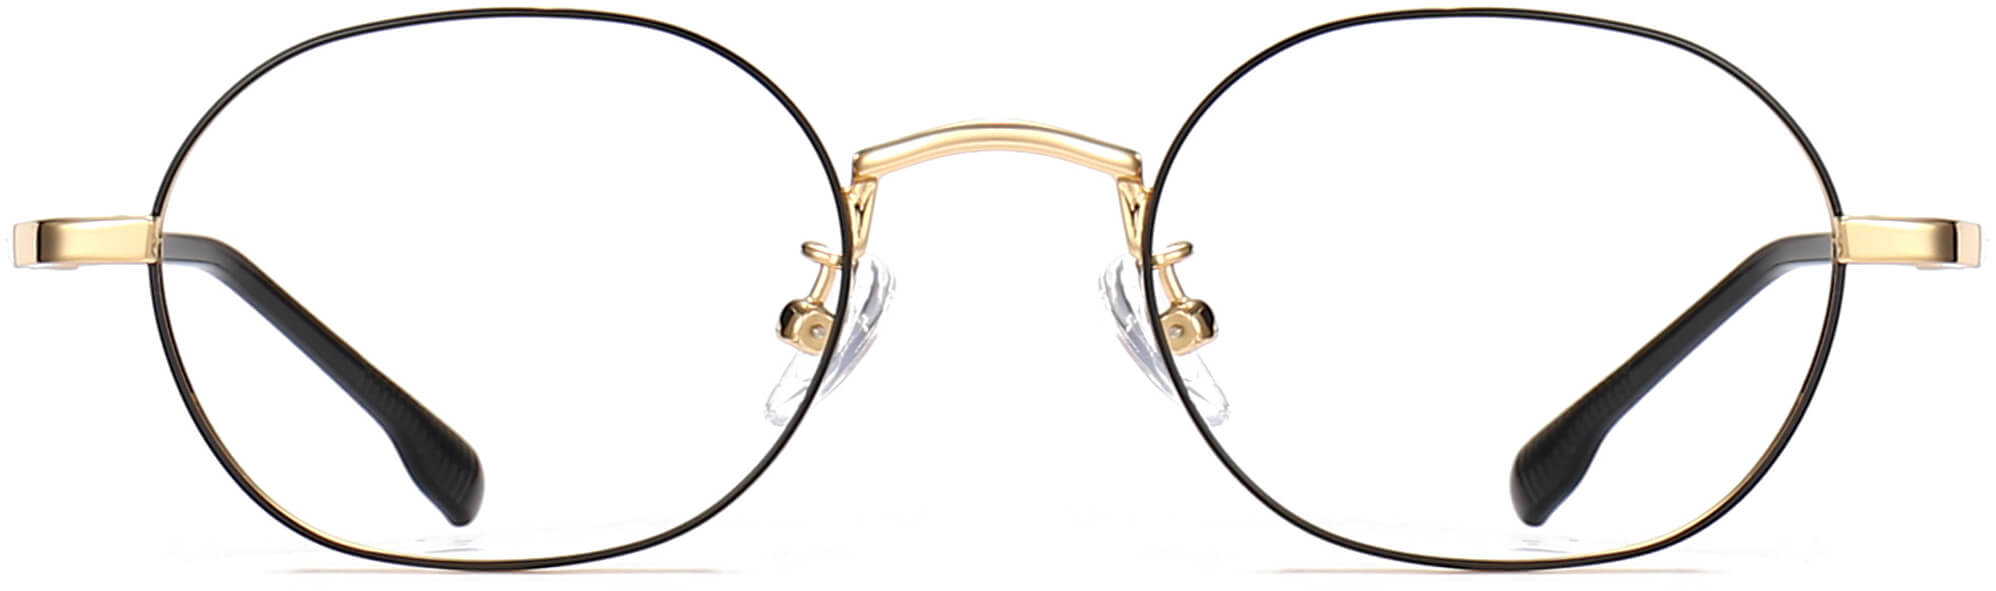 Santino Round Black Eyeglasses from ANRRI, front view